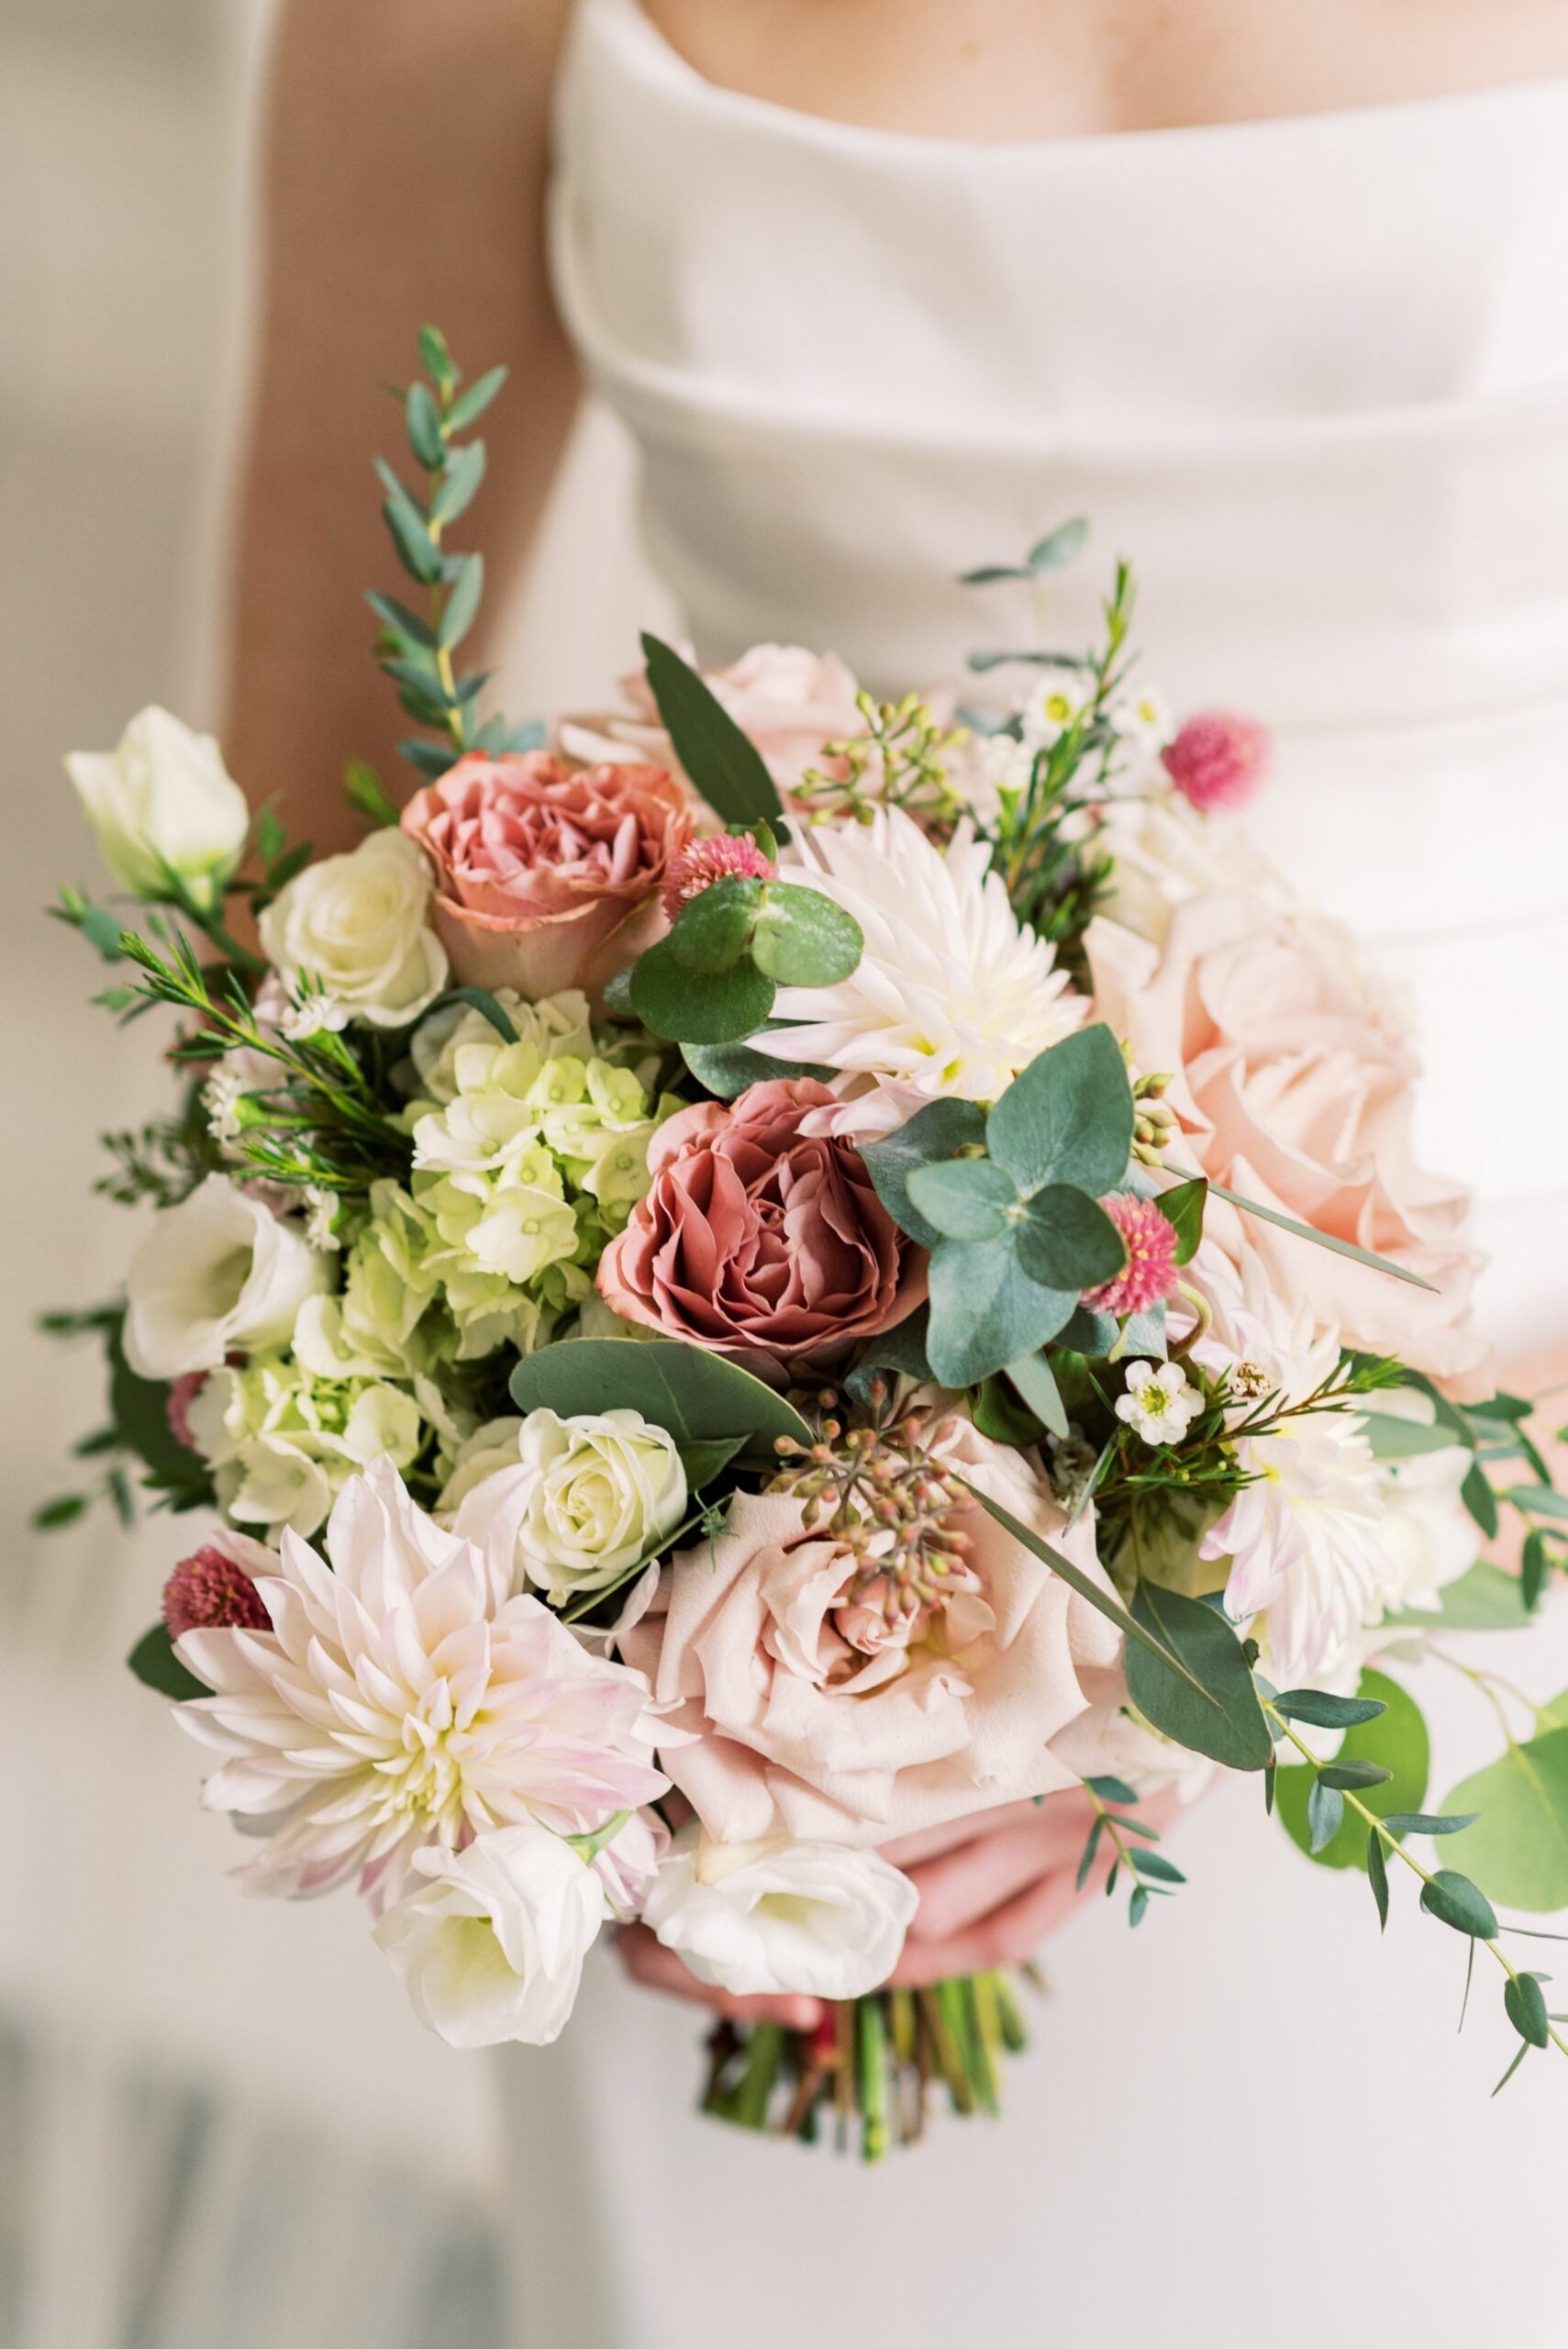 Crocus Designs by Laura – wedding floral designer in Halifax, Nova Scotia